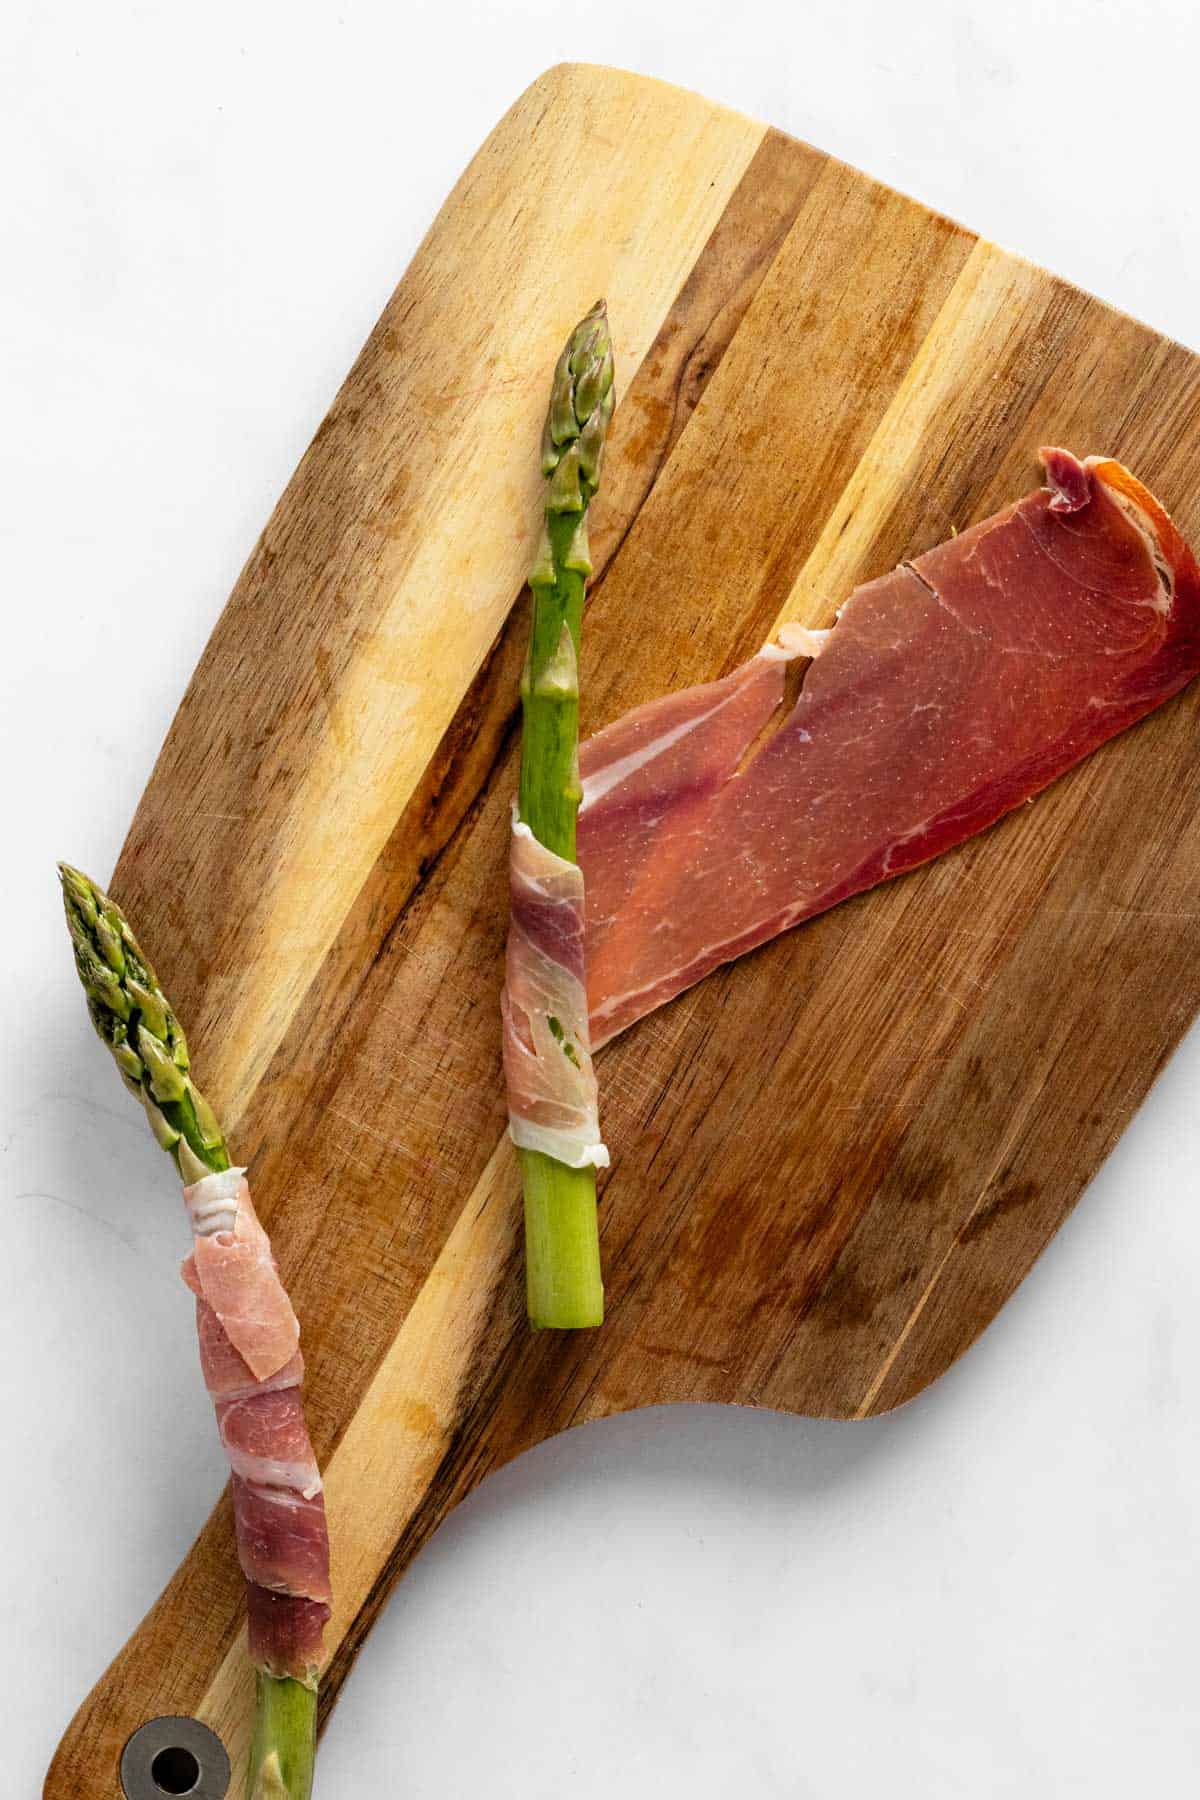 wrapping prosciutto slices around an asparagus stalk.